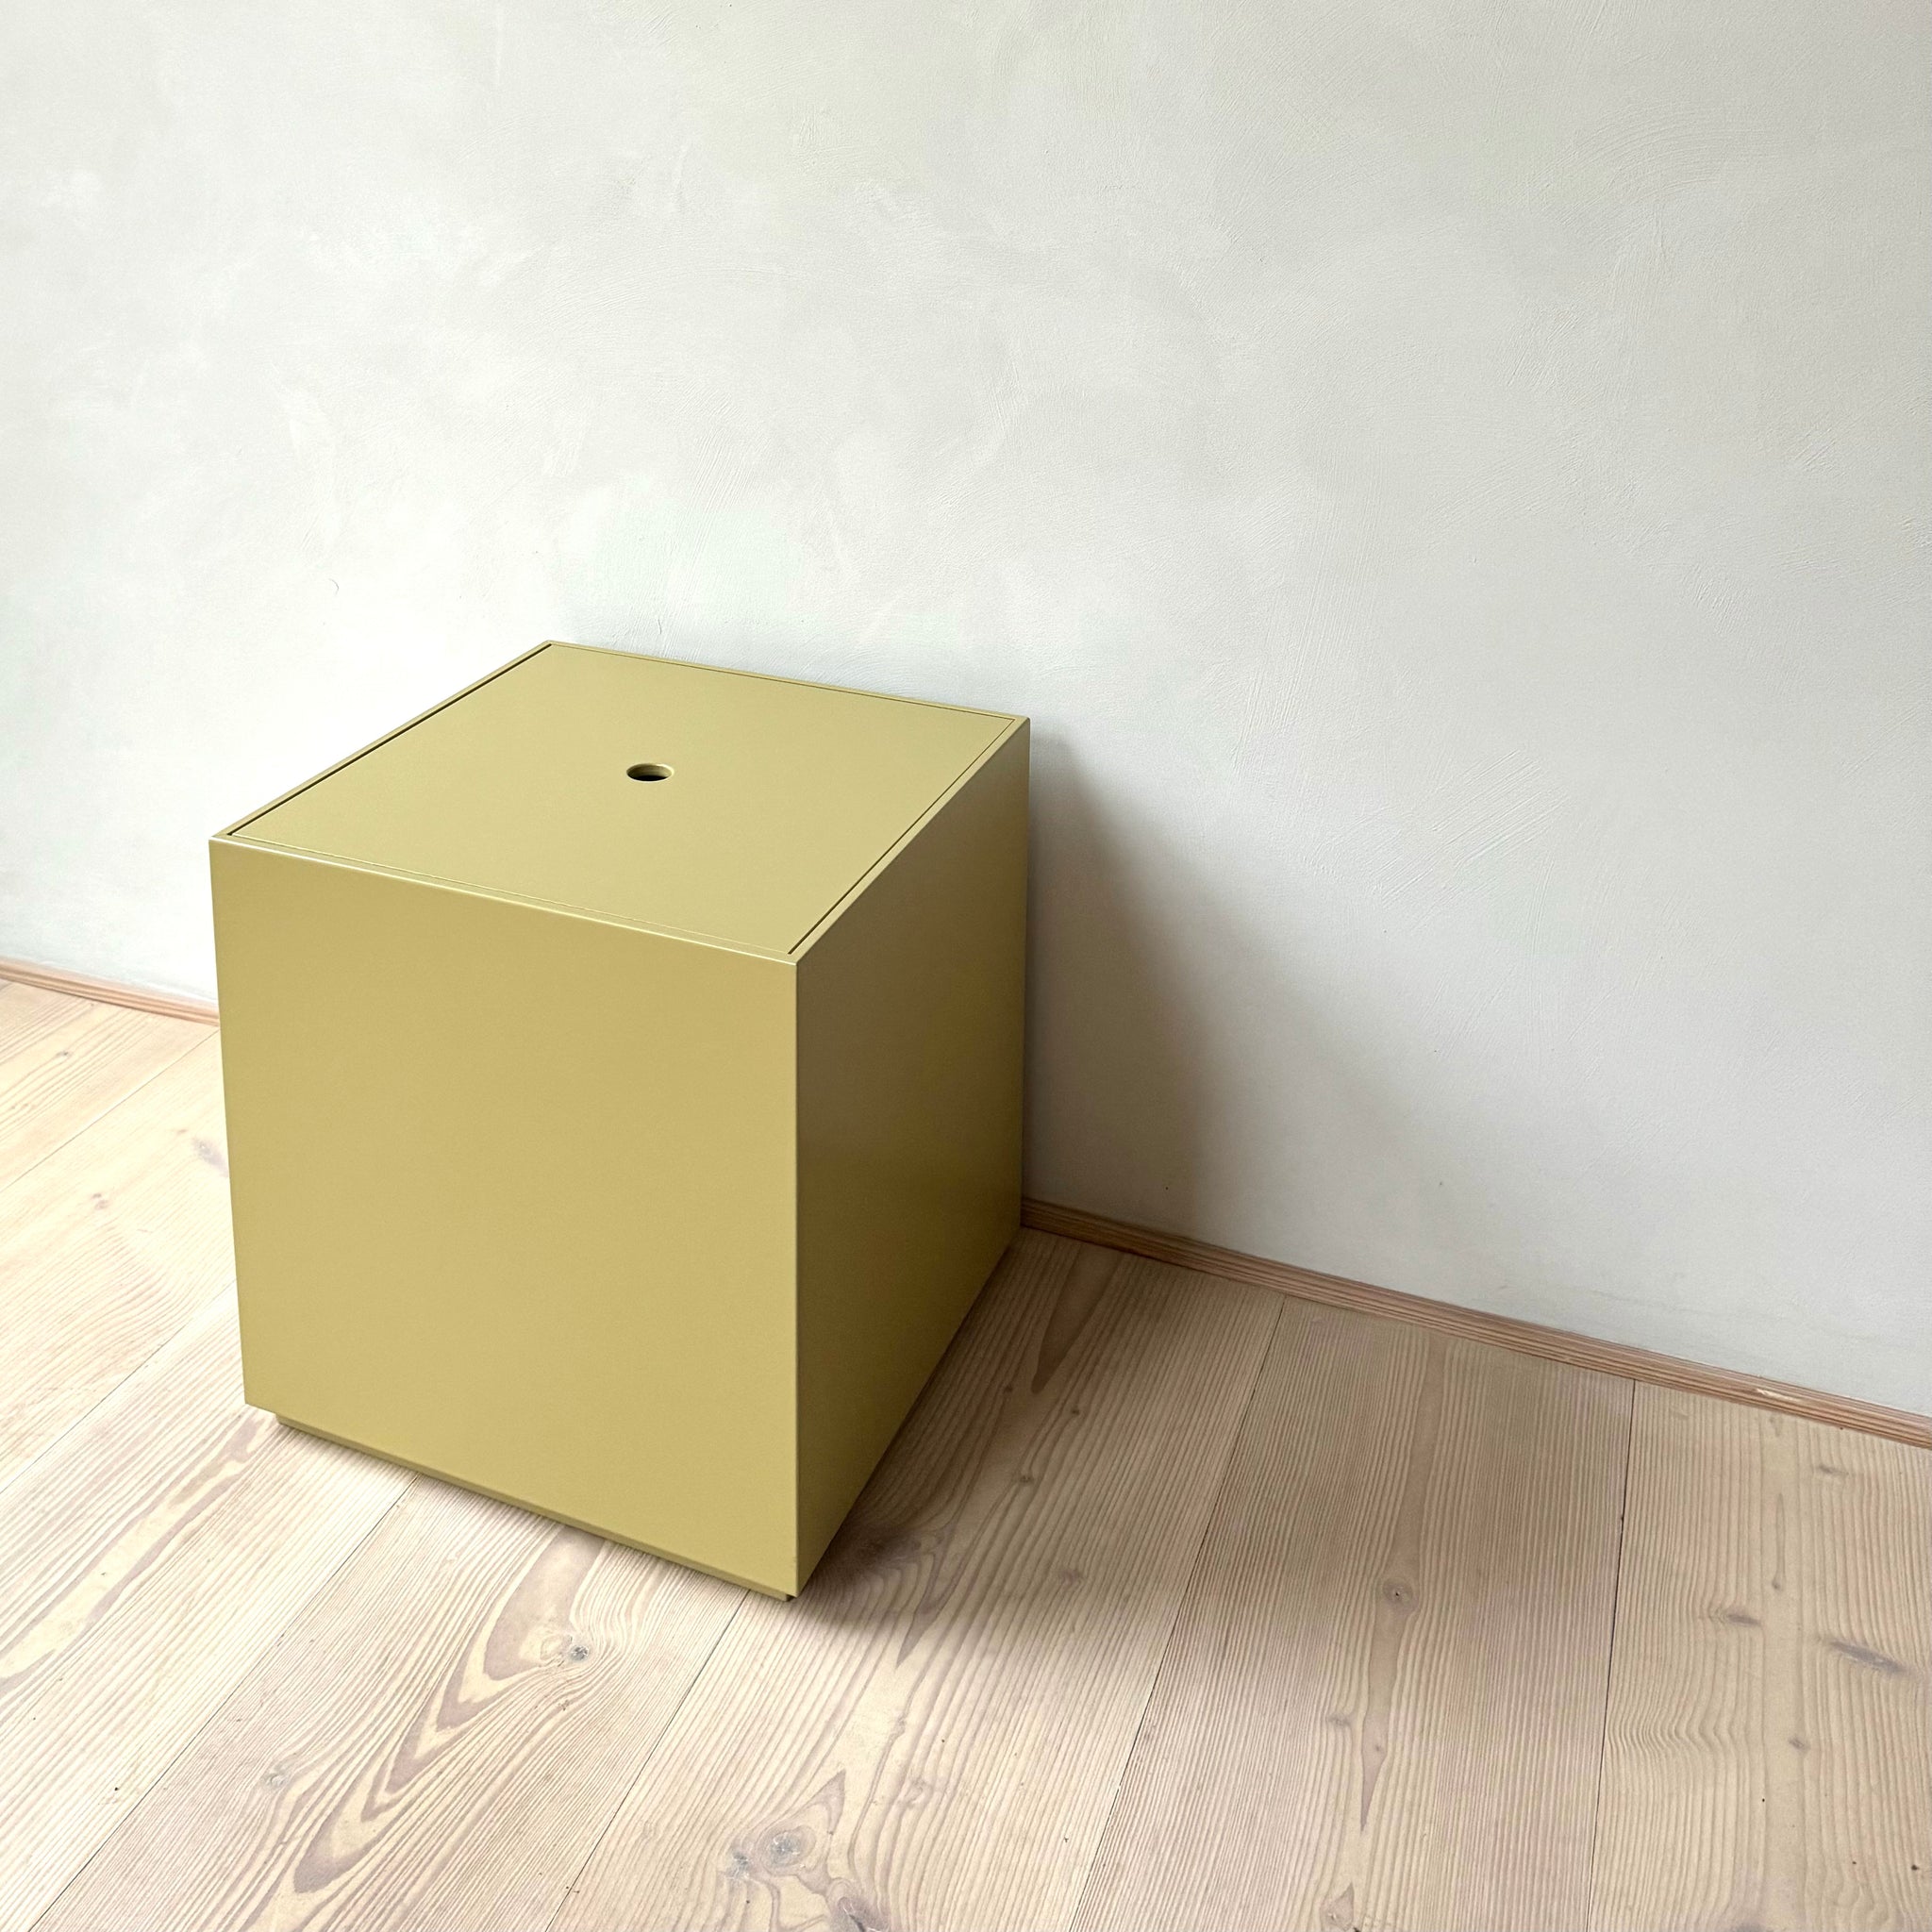 DANSKshop - The Box // Lacquered MDF - Box - DANSKmadeforrooms